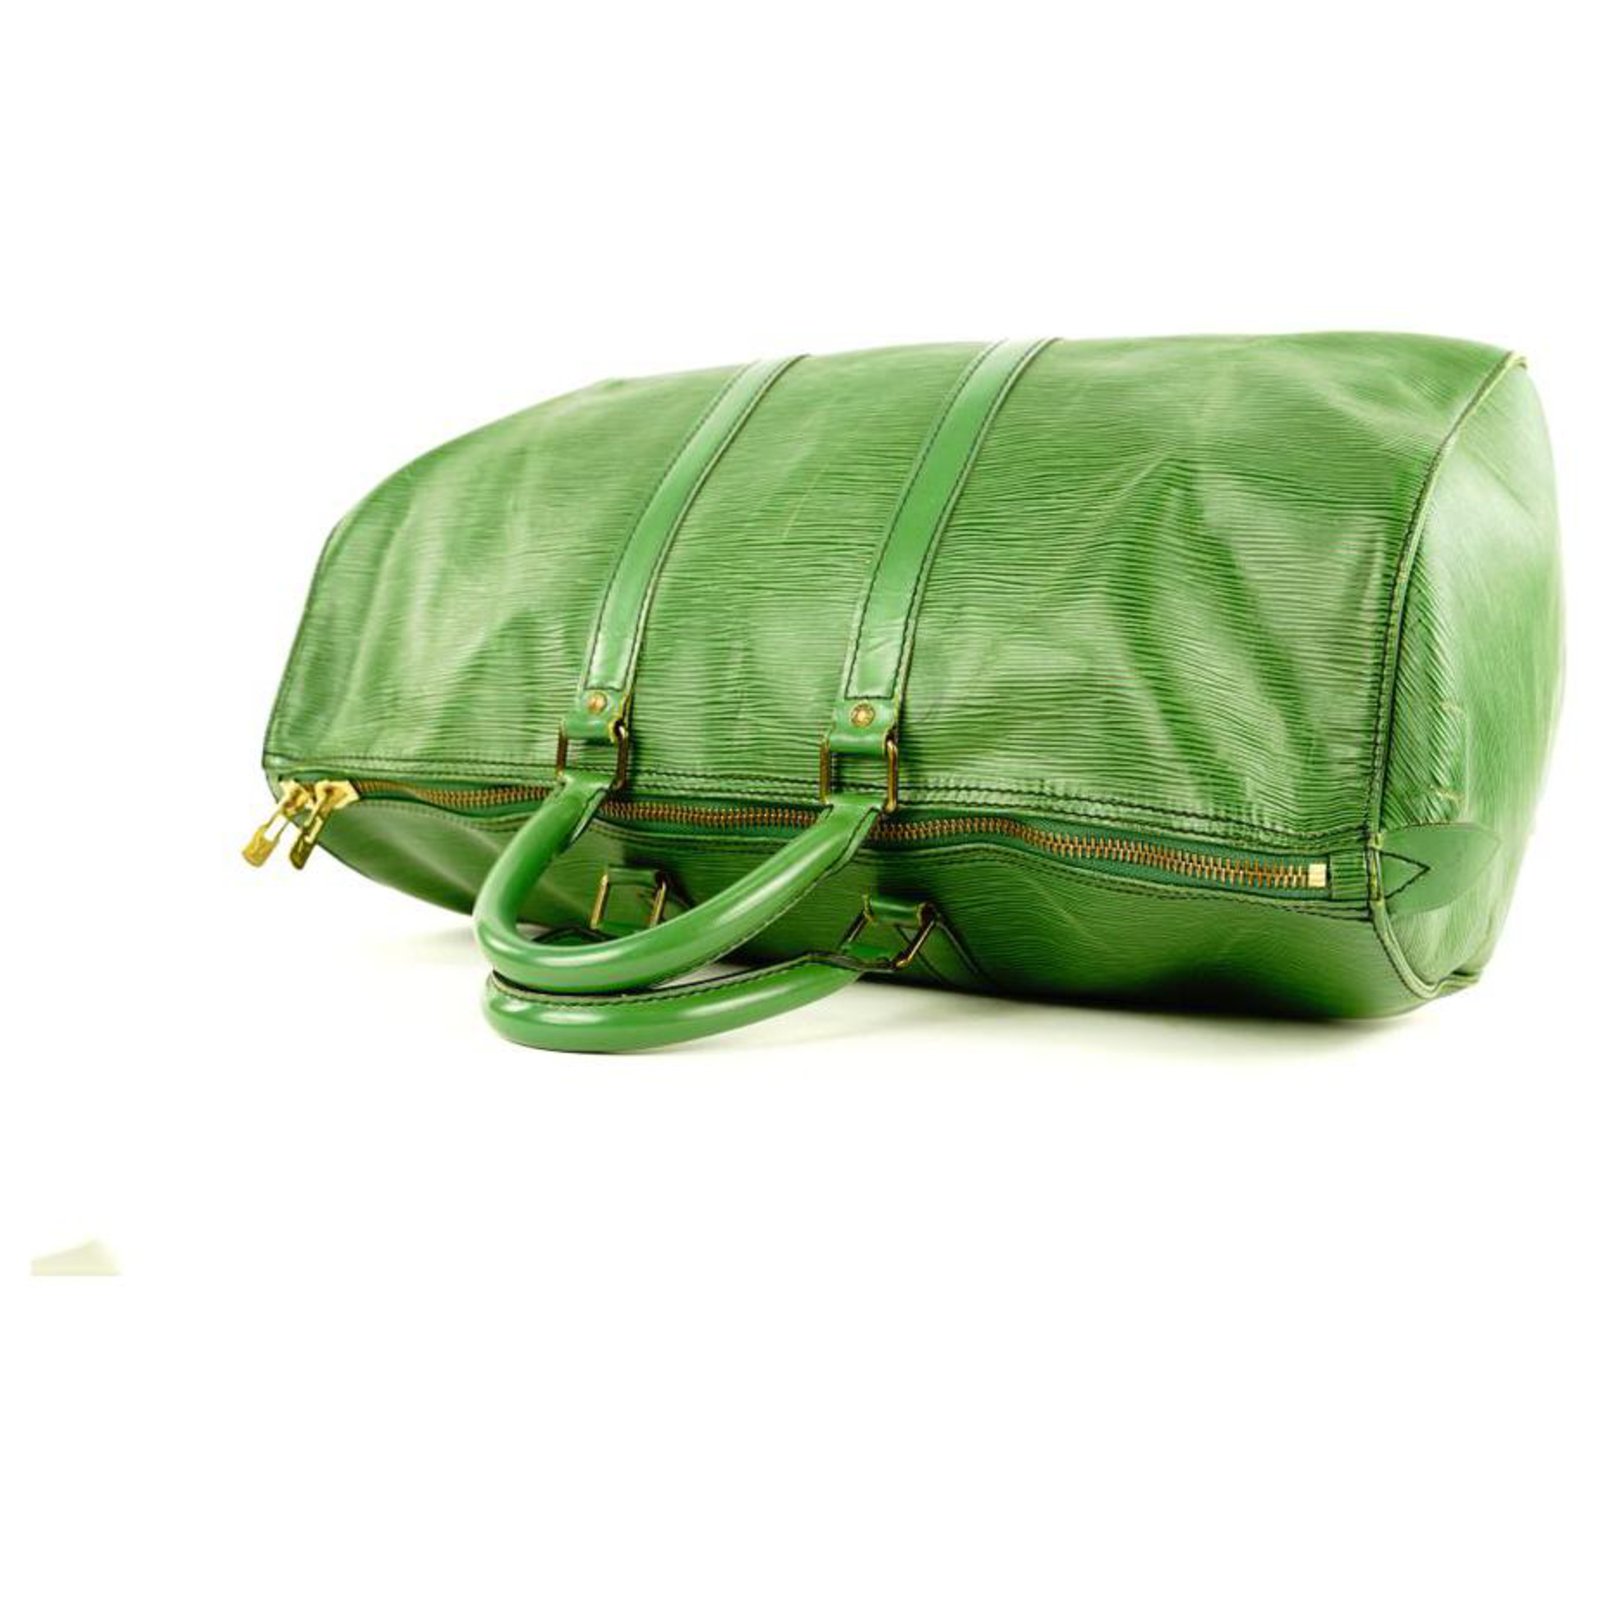 Louis Vuitton Green Epi Leather Borneo Keepall 45 Duffle Bag 569lvs311